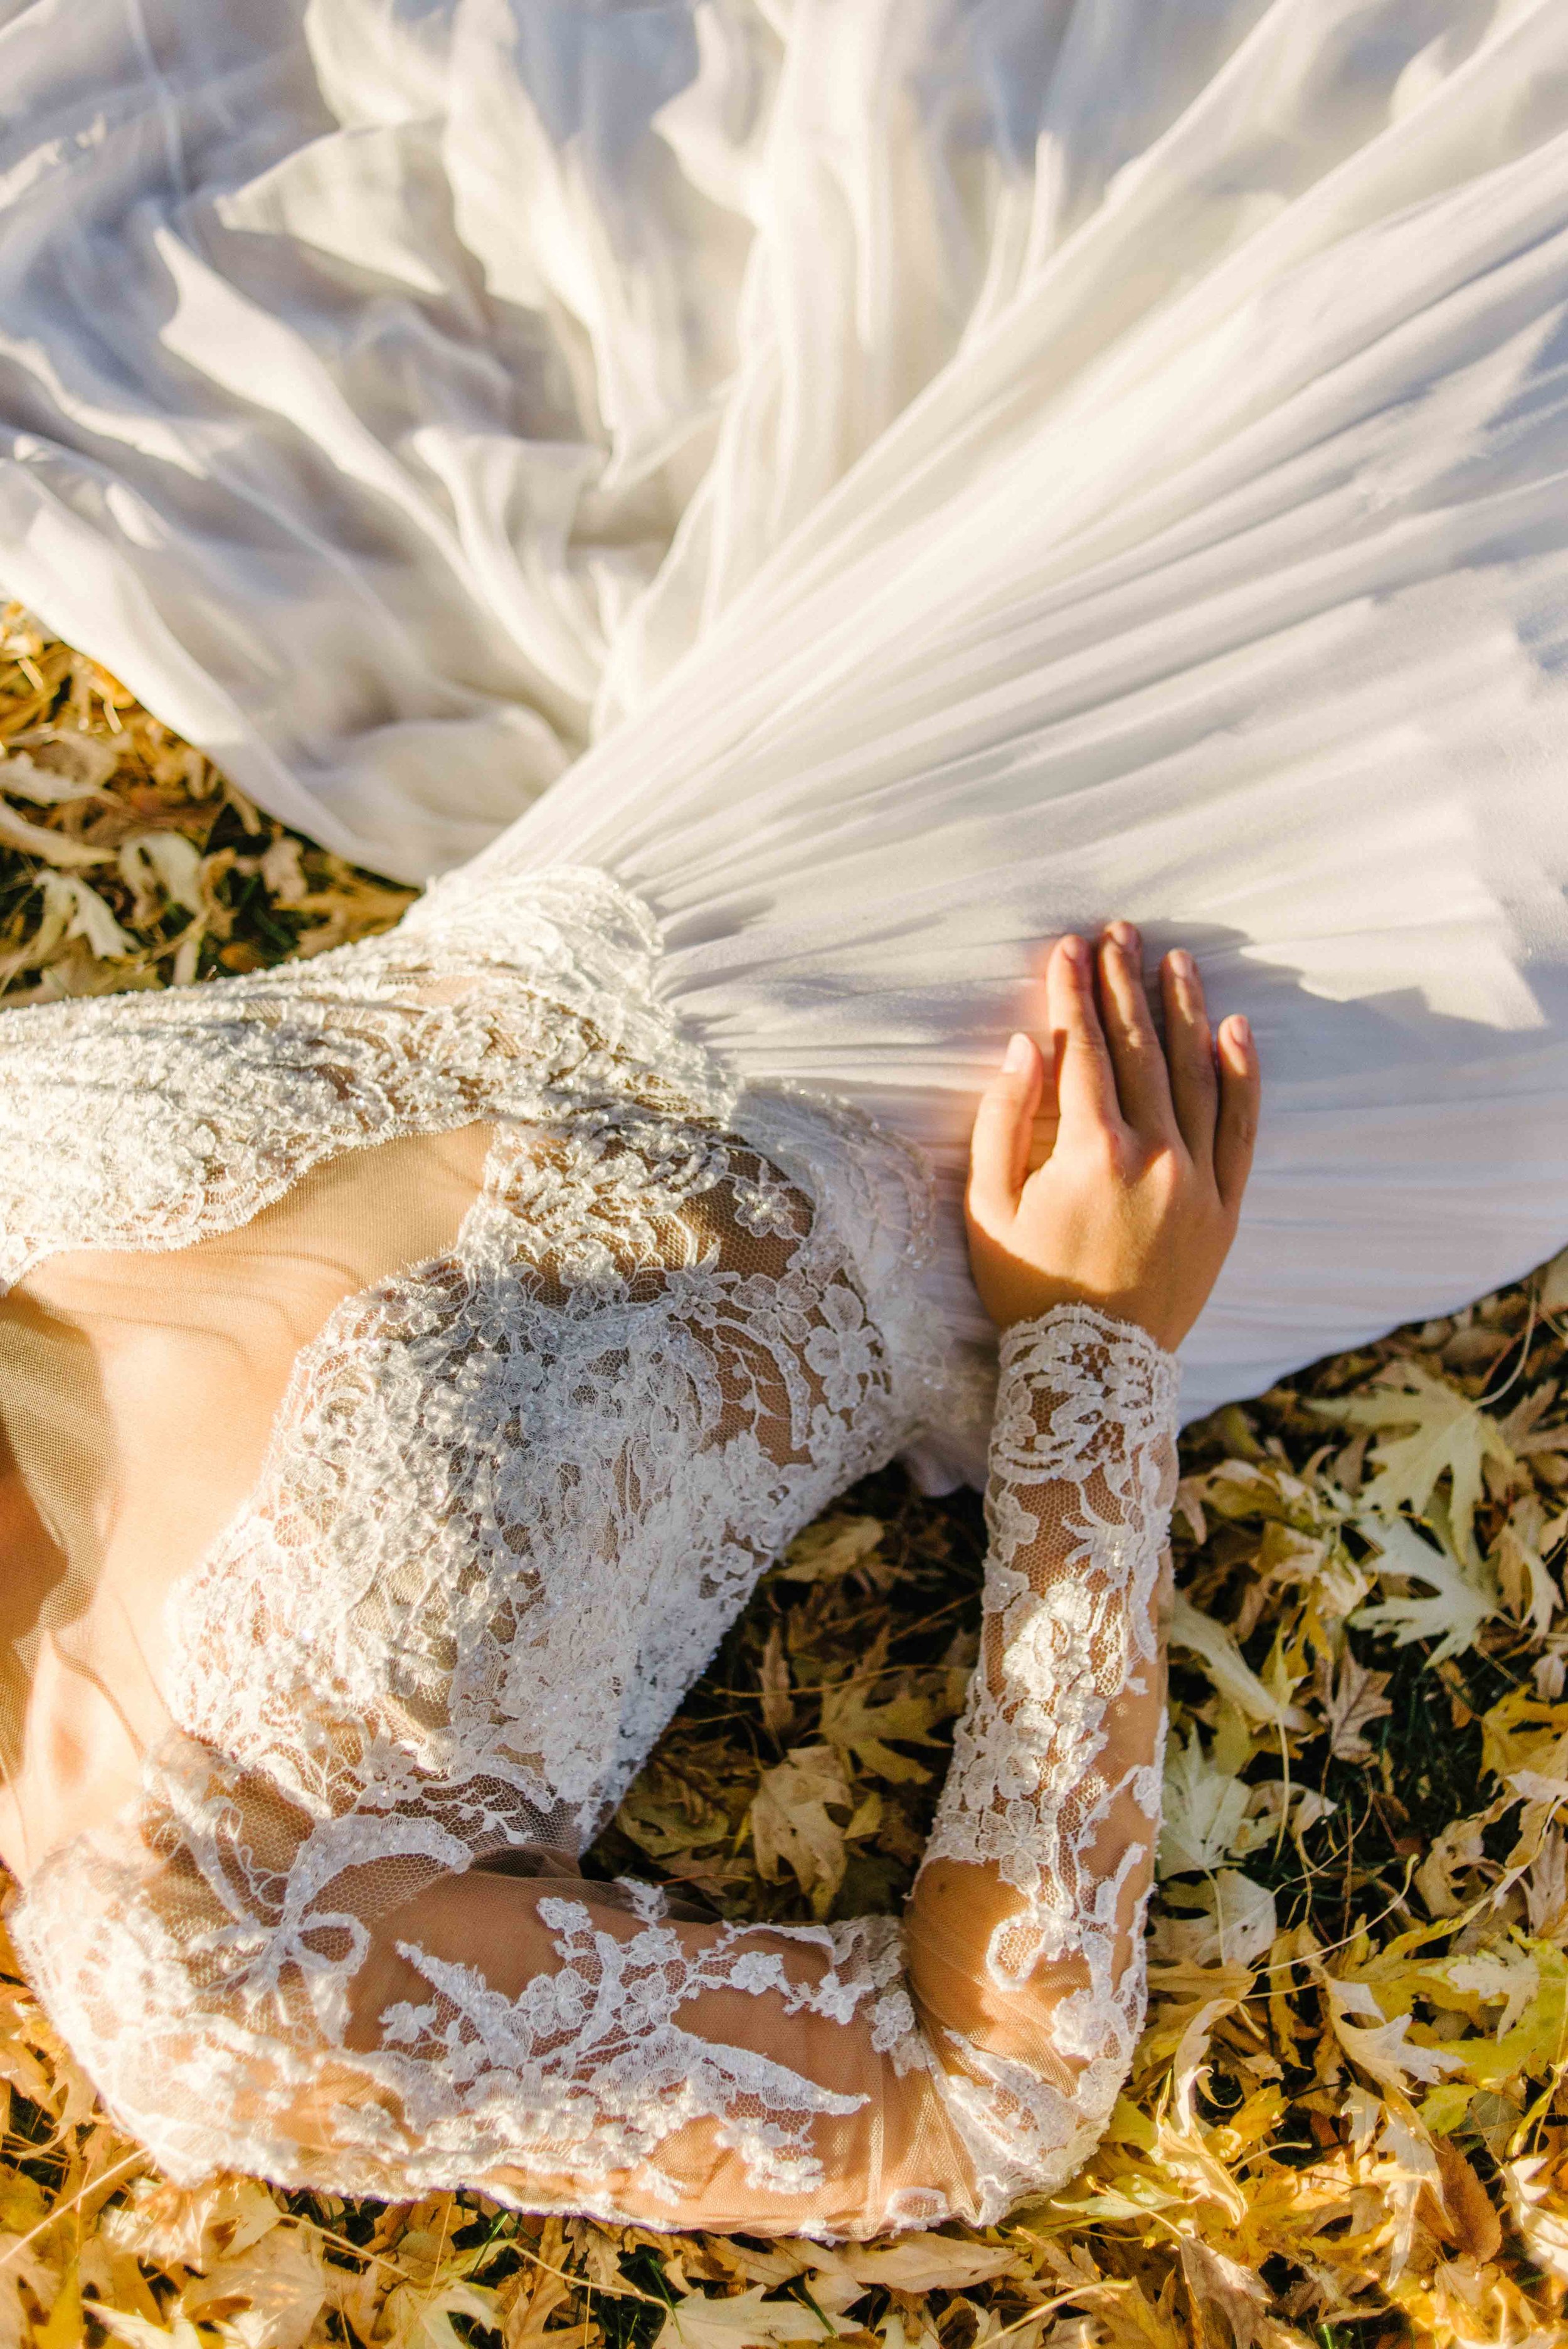  Fall Wedding Inspiration | Anne Barge "Leyland"&nbsp;| available at Little White Dress Bridal Shop in Denver | Photography: Kelly Leggett 